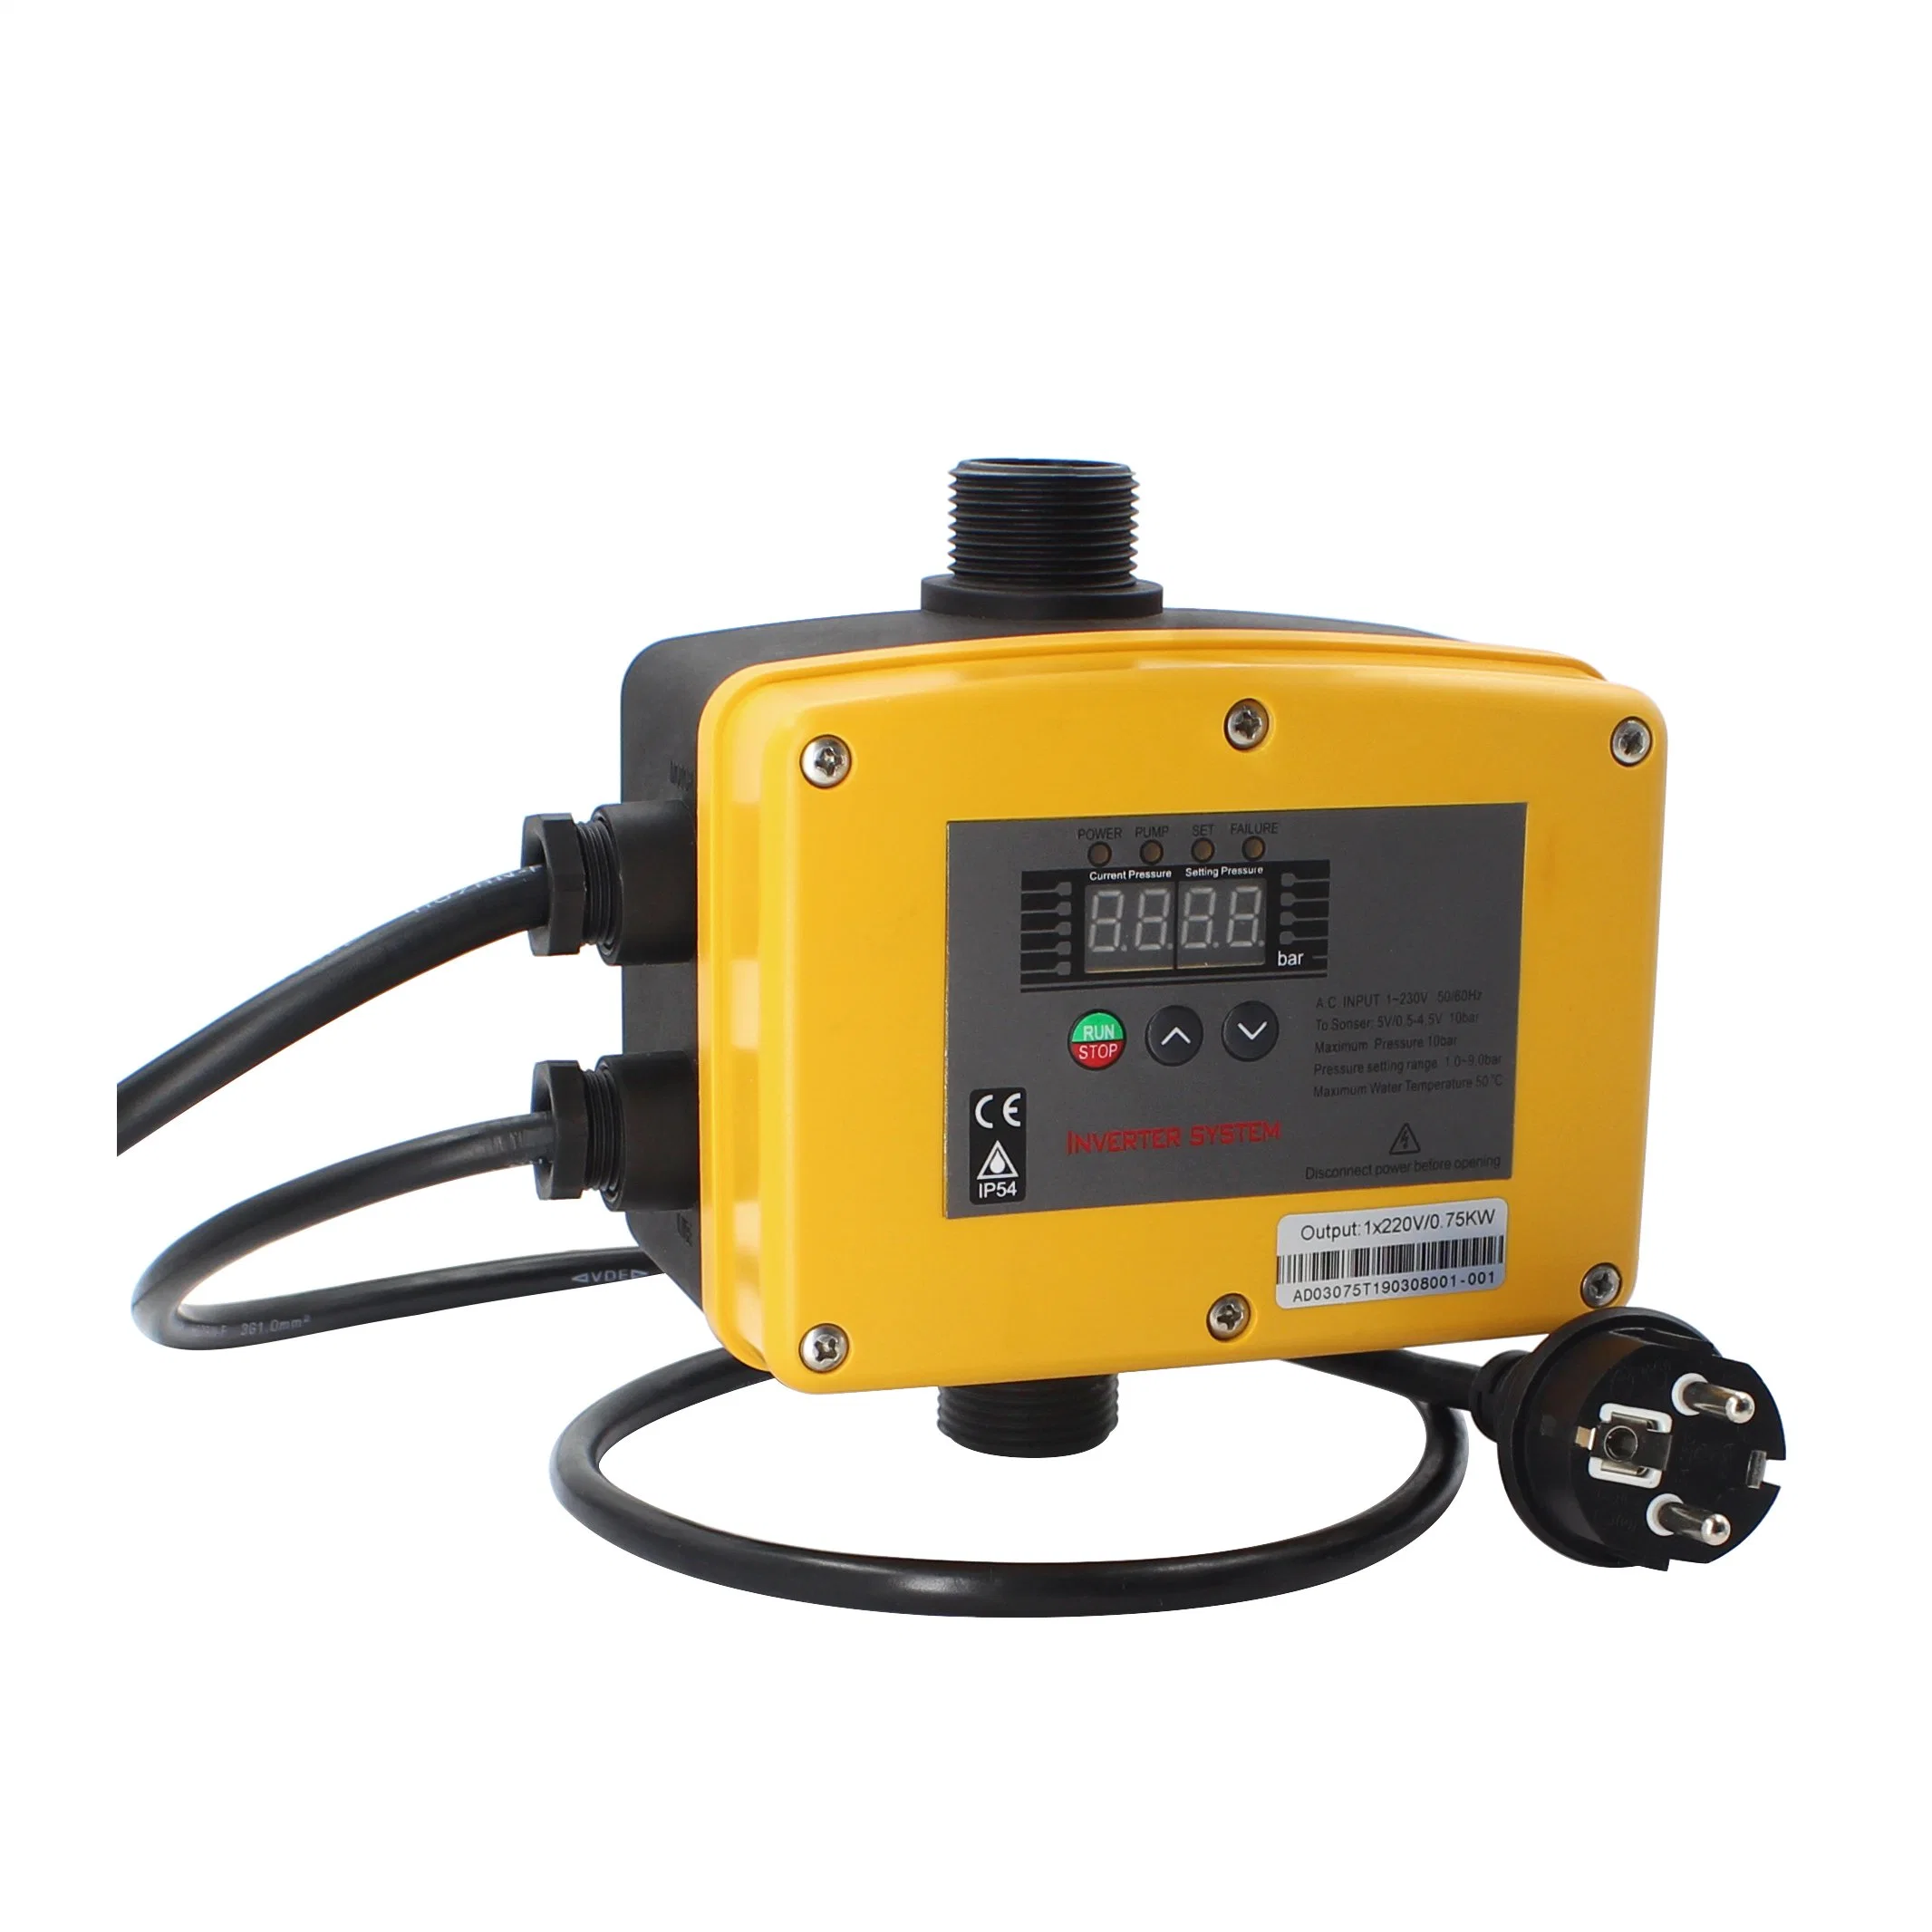 Automatic Pressure Controller Energy Saving Pressure Control